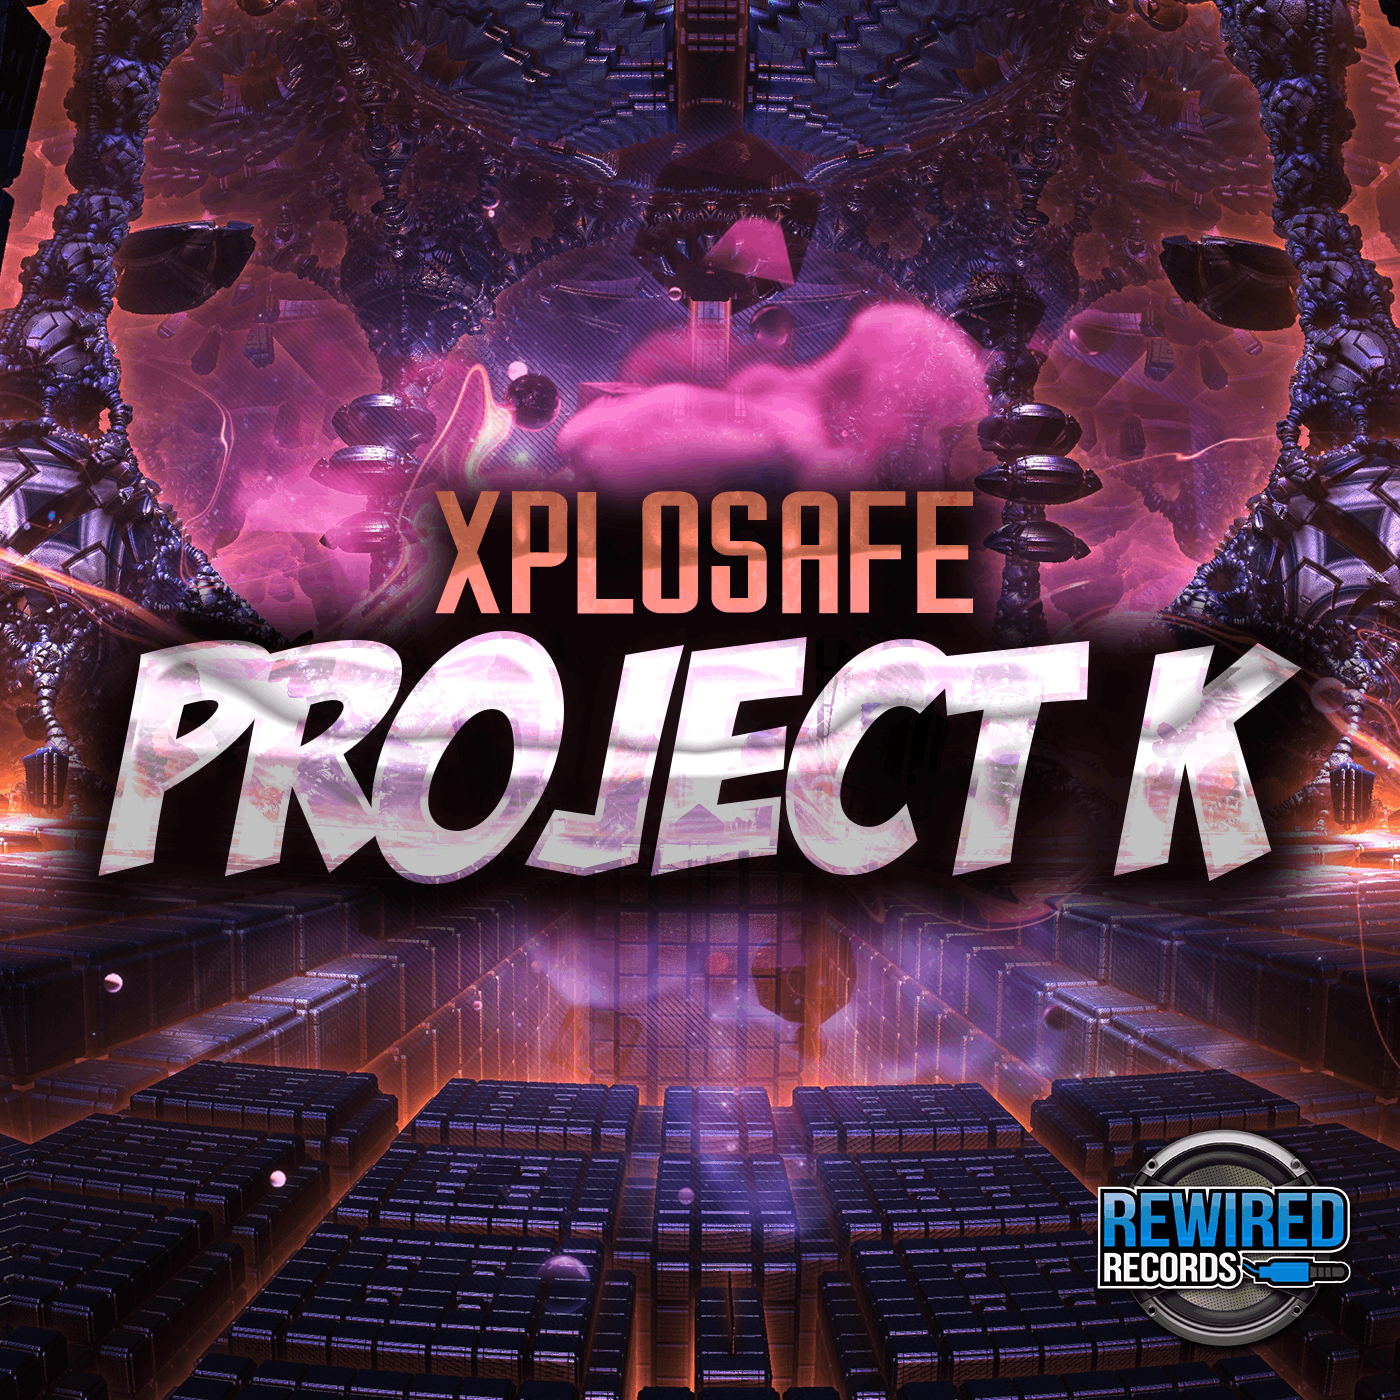 Xplosafe - Project K - Rewired Records